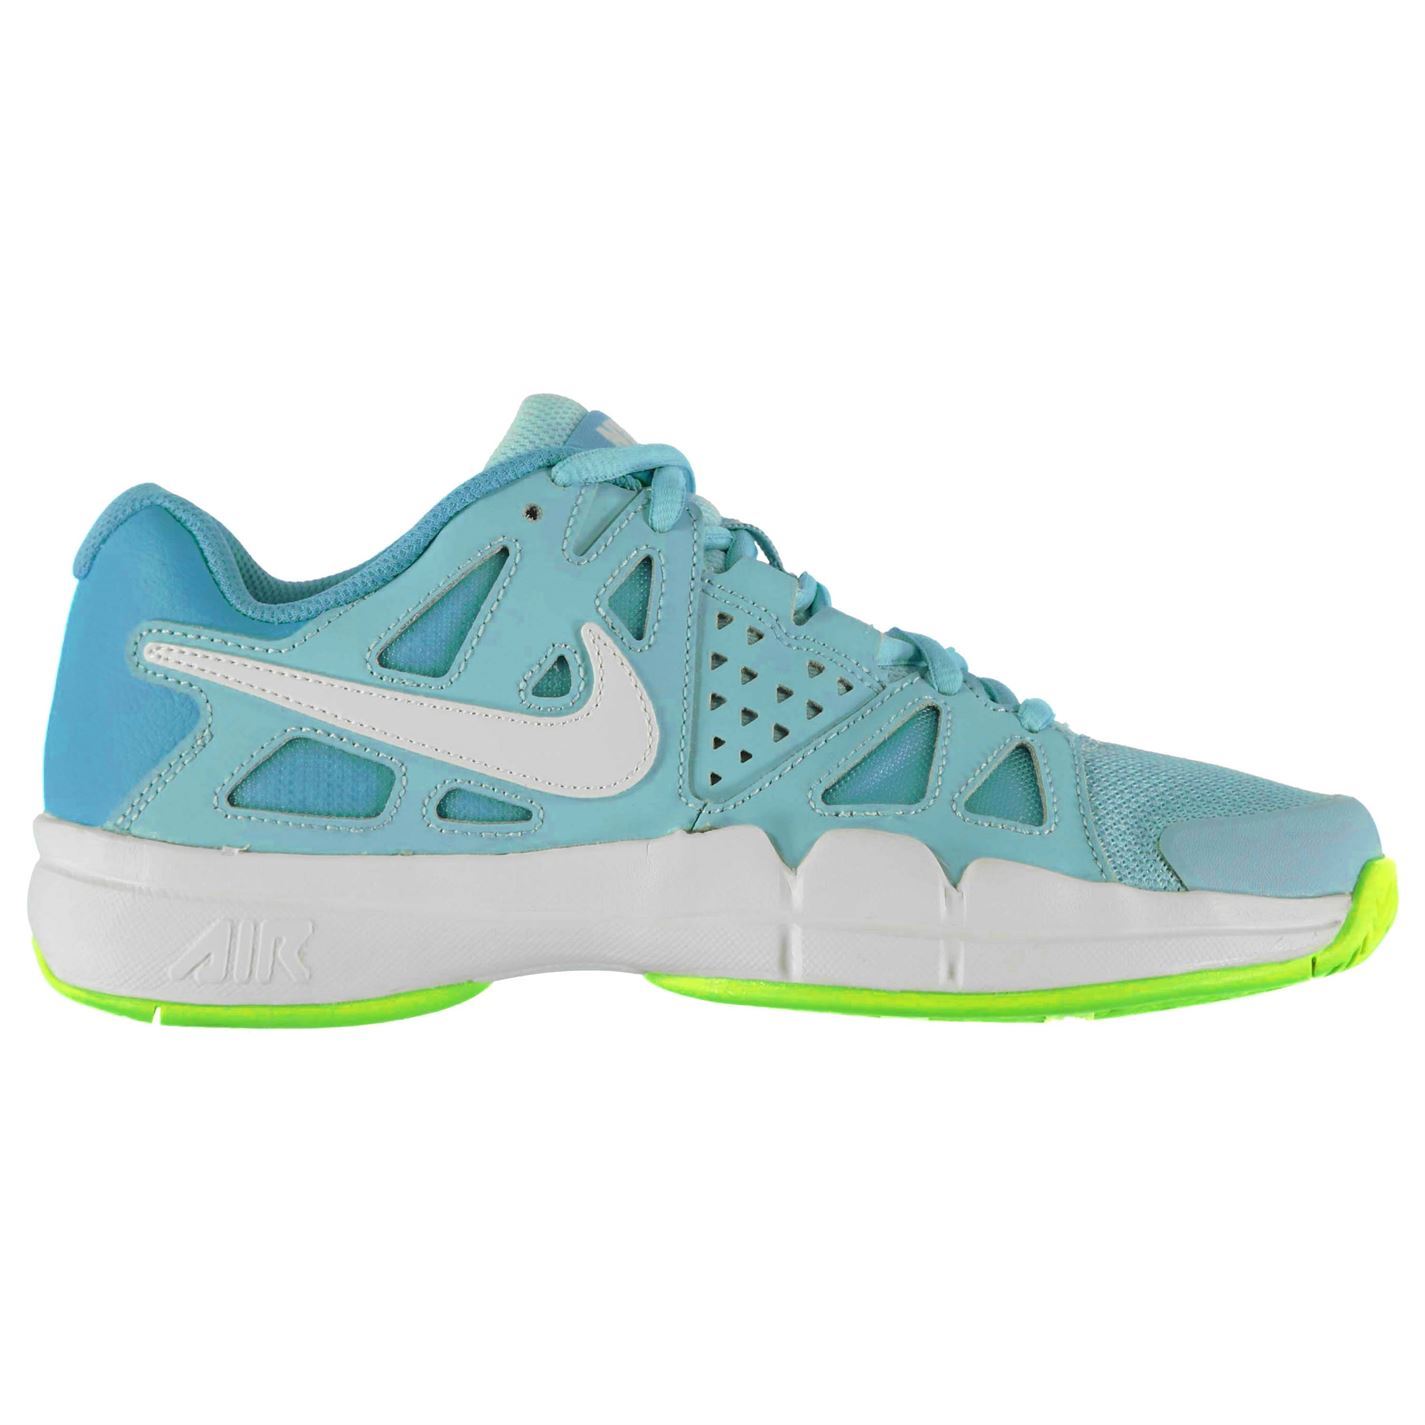 Nike Air Vapor Advantage Tennis Shoes Womens Blue/White Sports Trainers Sneakers